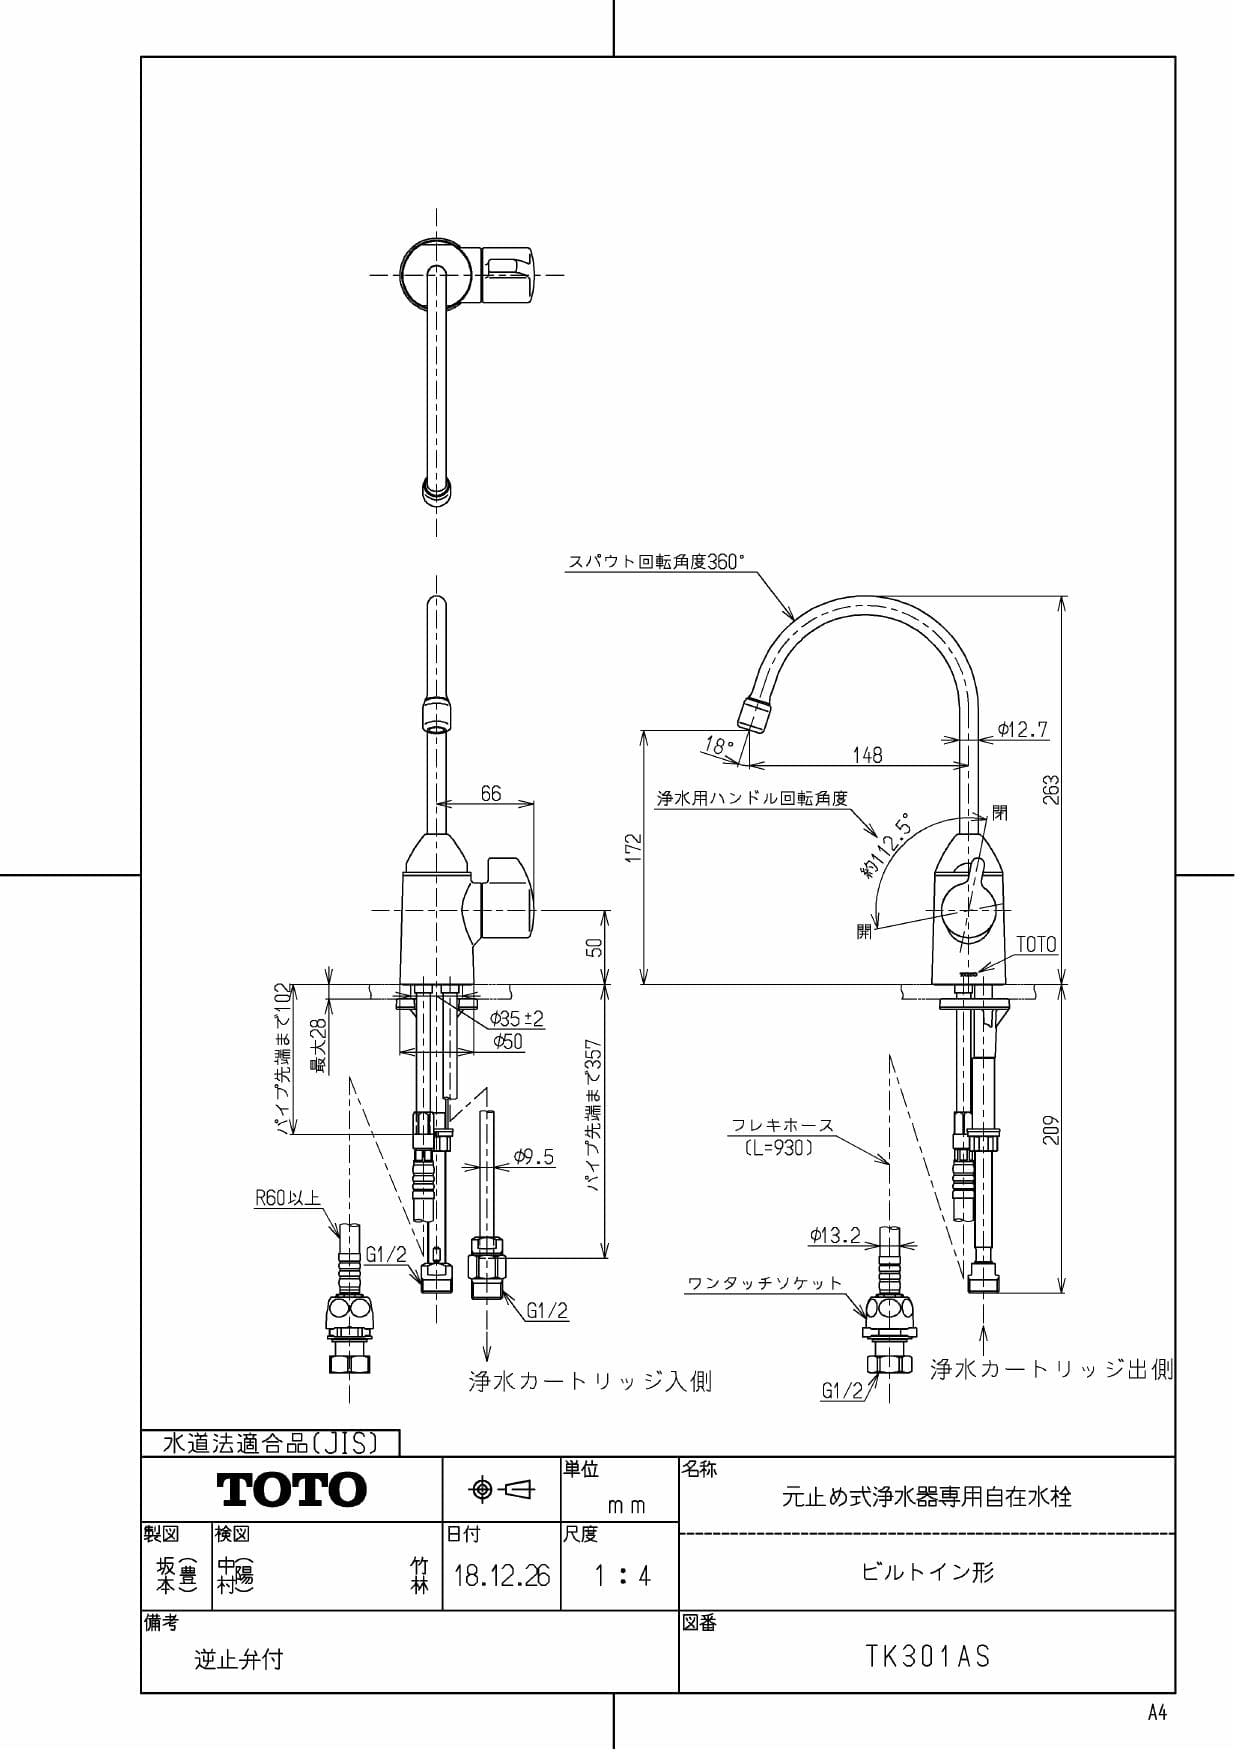 TOTO 元止め式浄水器専用自在水栓(ビルトイン形) TK301ASA - 通販 